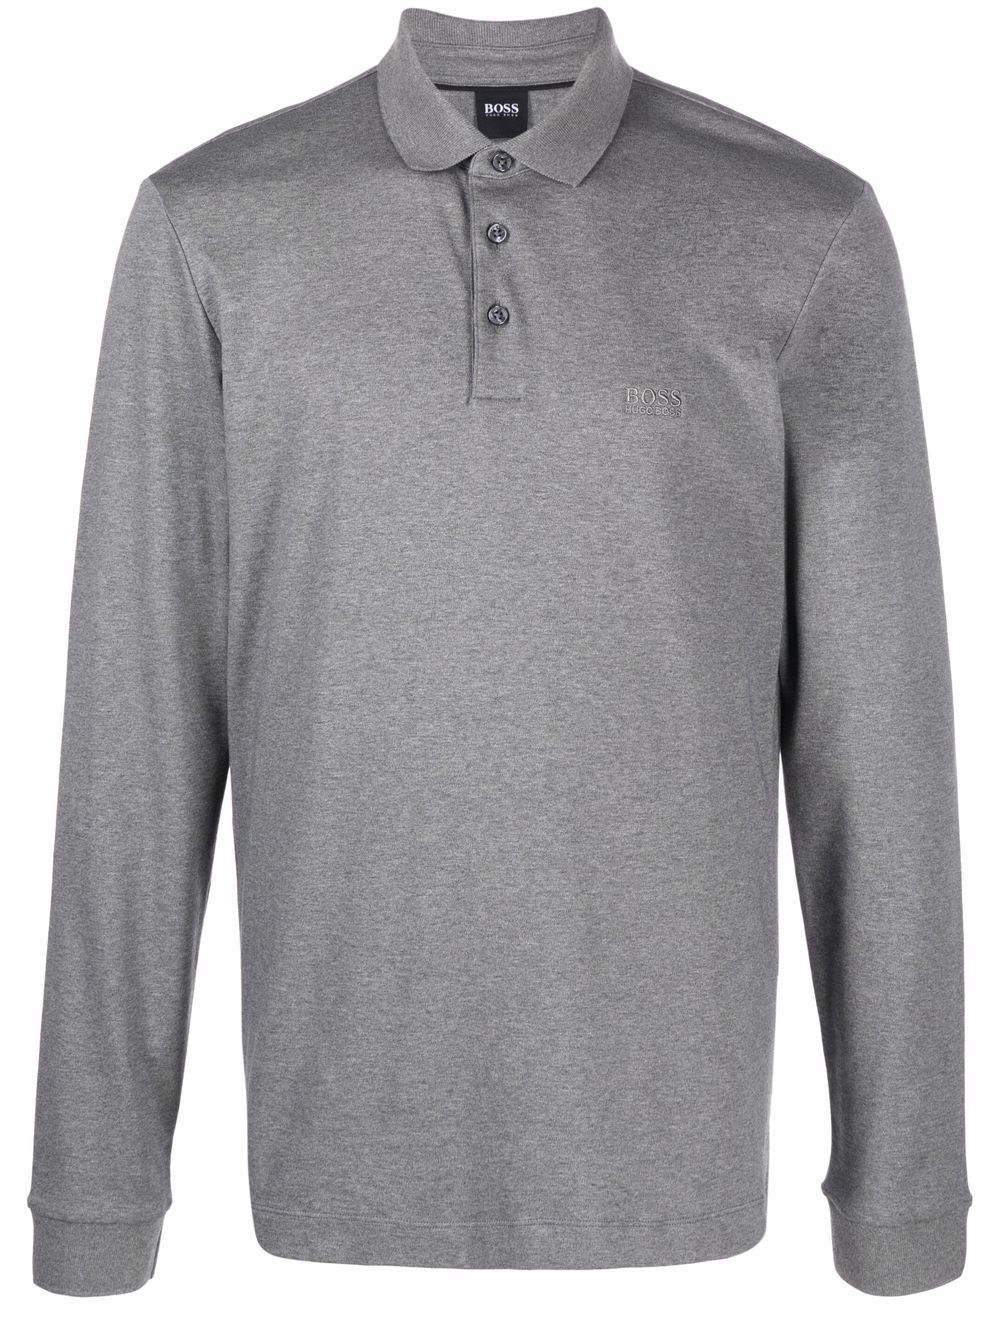 BOSS Pado Long Sleeve Polo Shirt - Farfetch